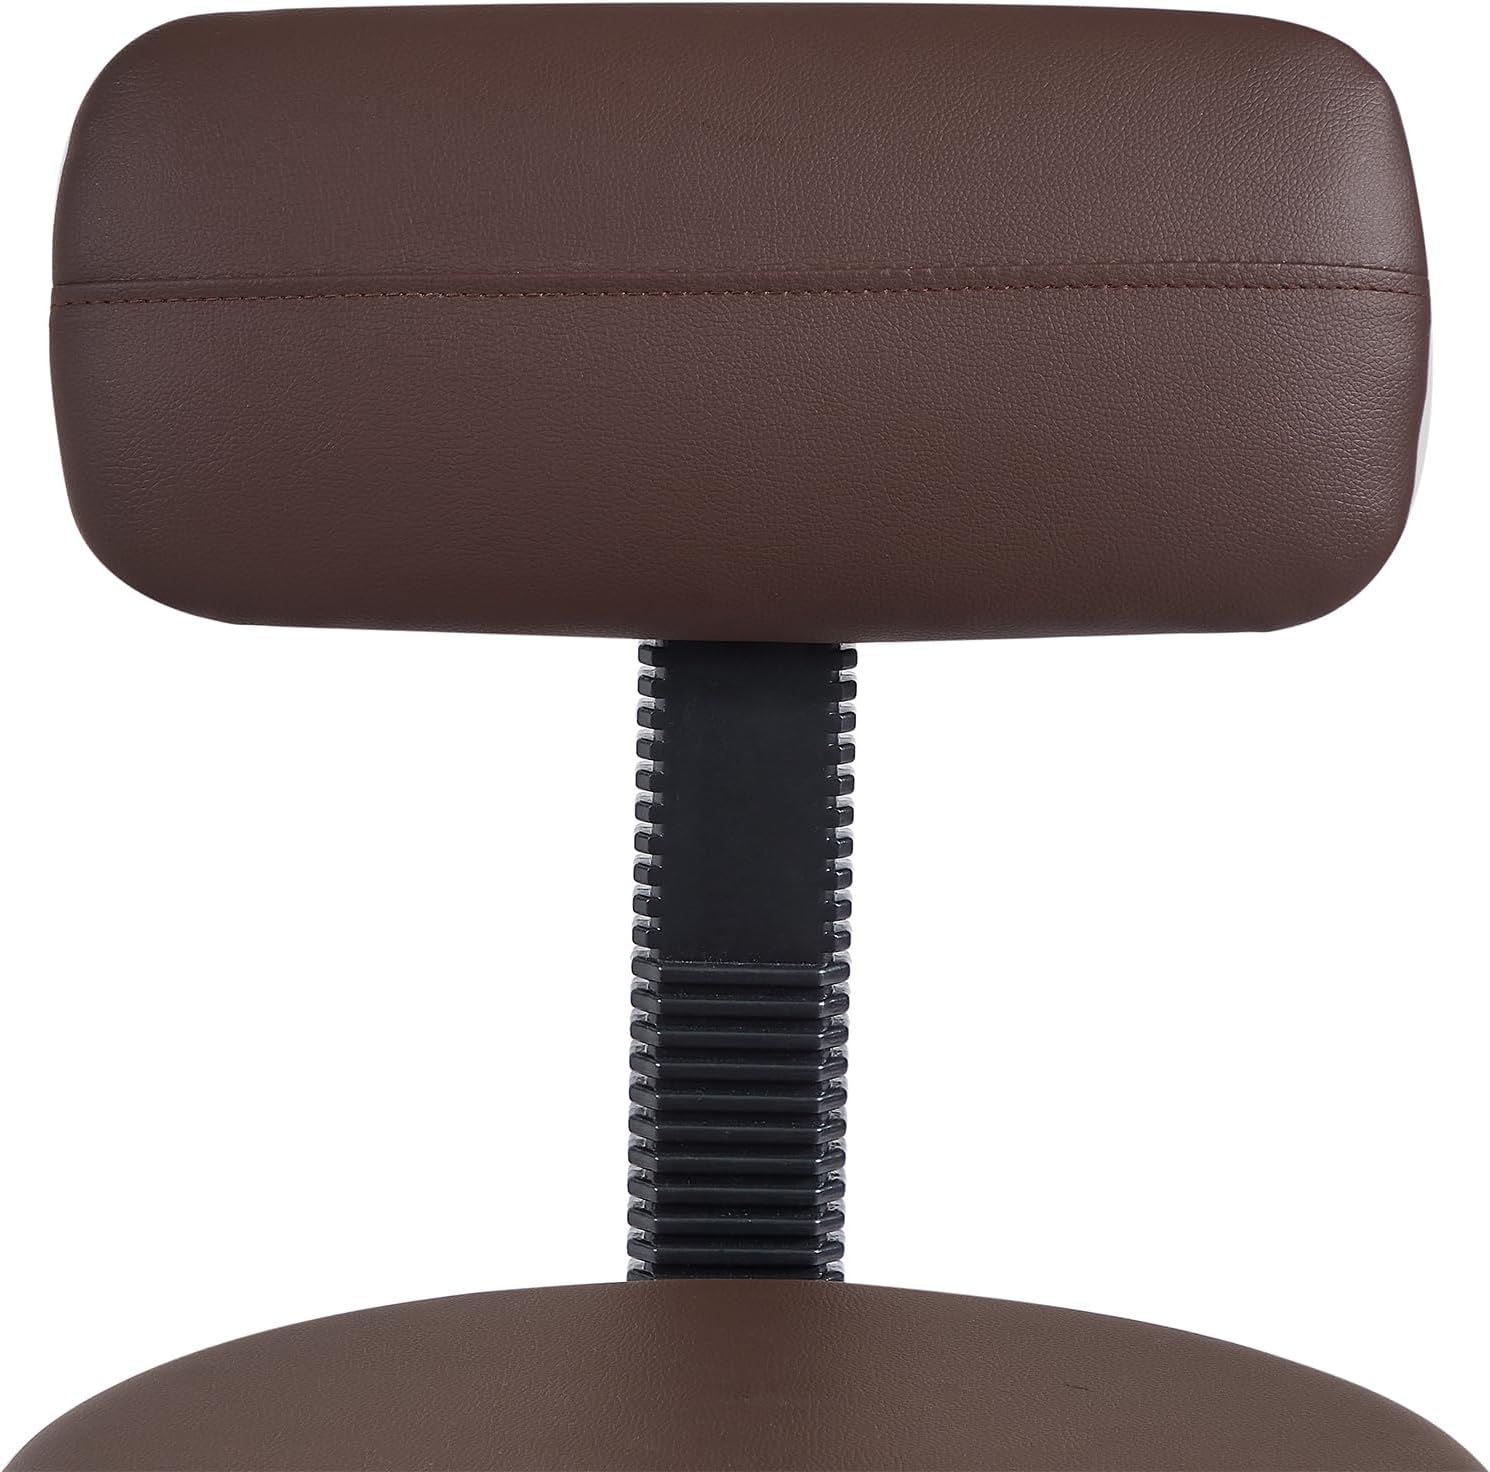 VECELO Home Office Desk Chair with Backrest for Garage Shop Workbench Kitchen Medical Salon